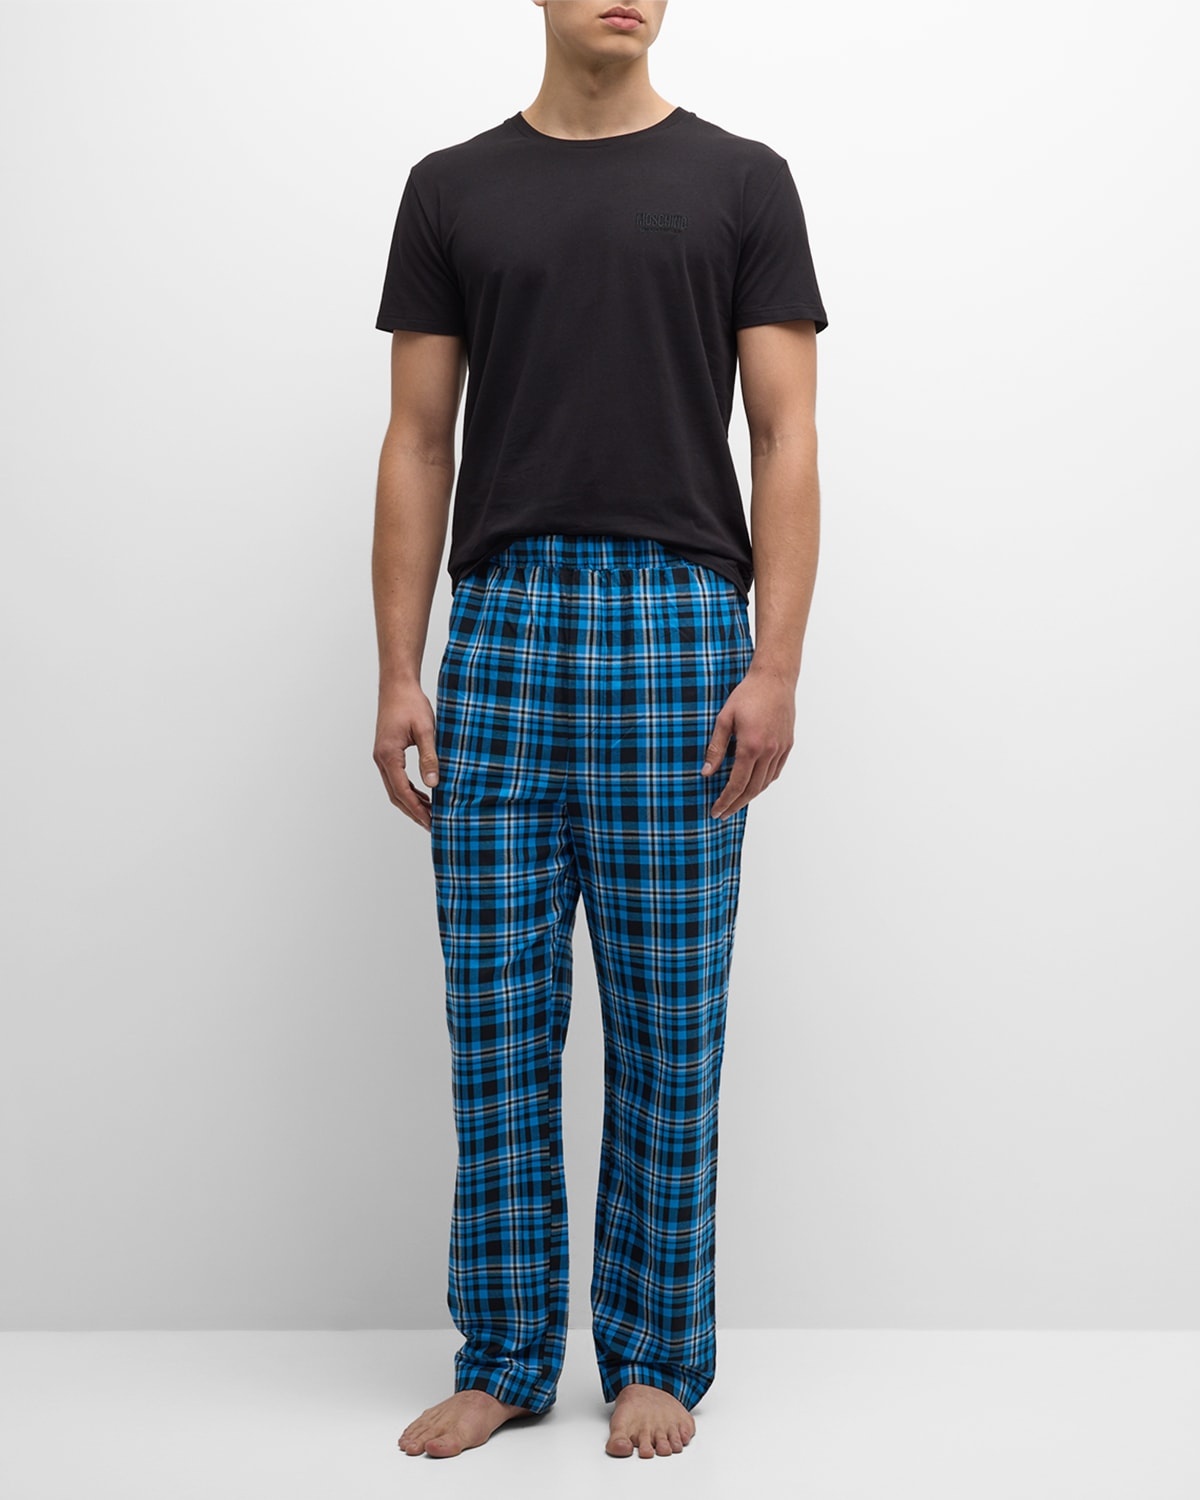 Men's Cotton Pajama Set - 3